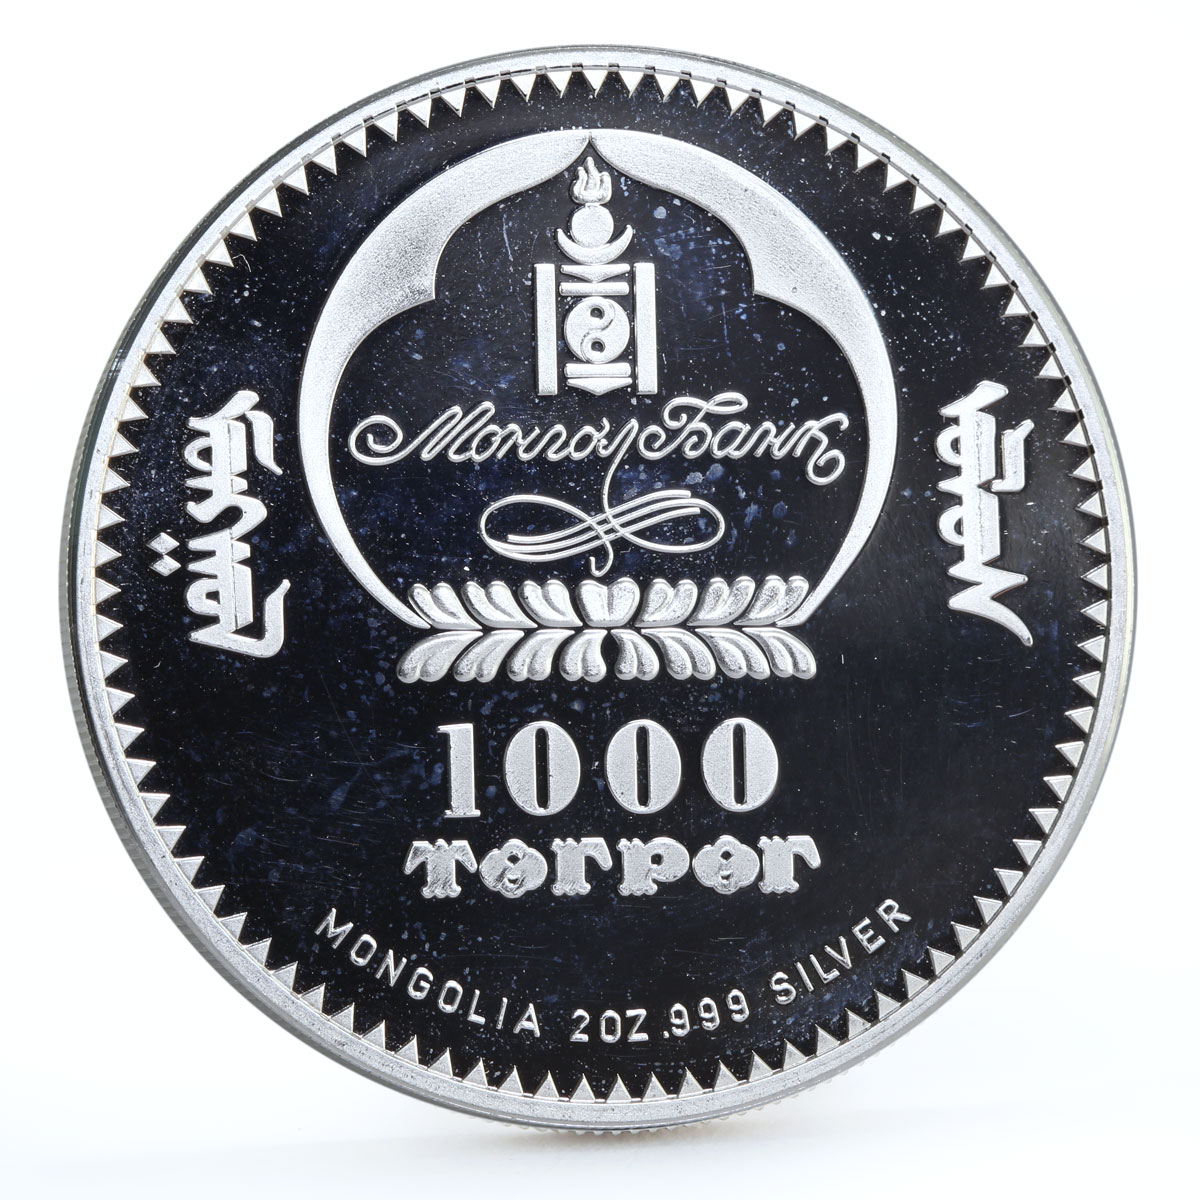 Mongolia 1000 togrog Tsars of Russia Nicholas I colored proof silver coin 2007